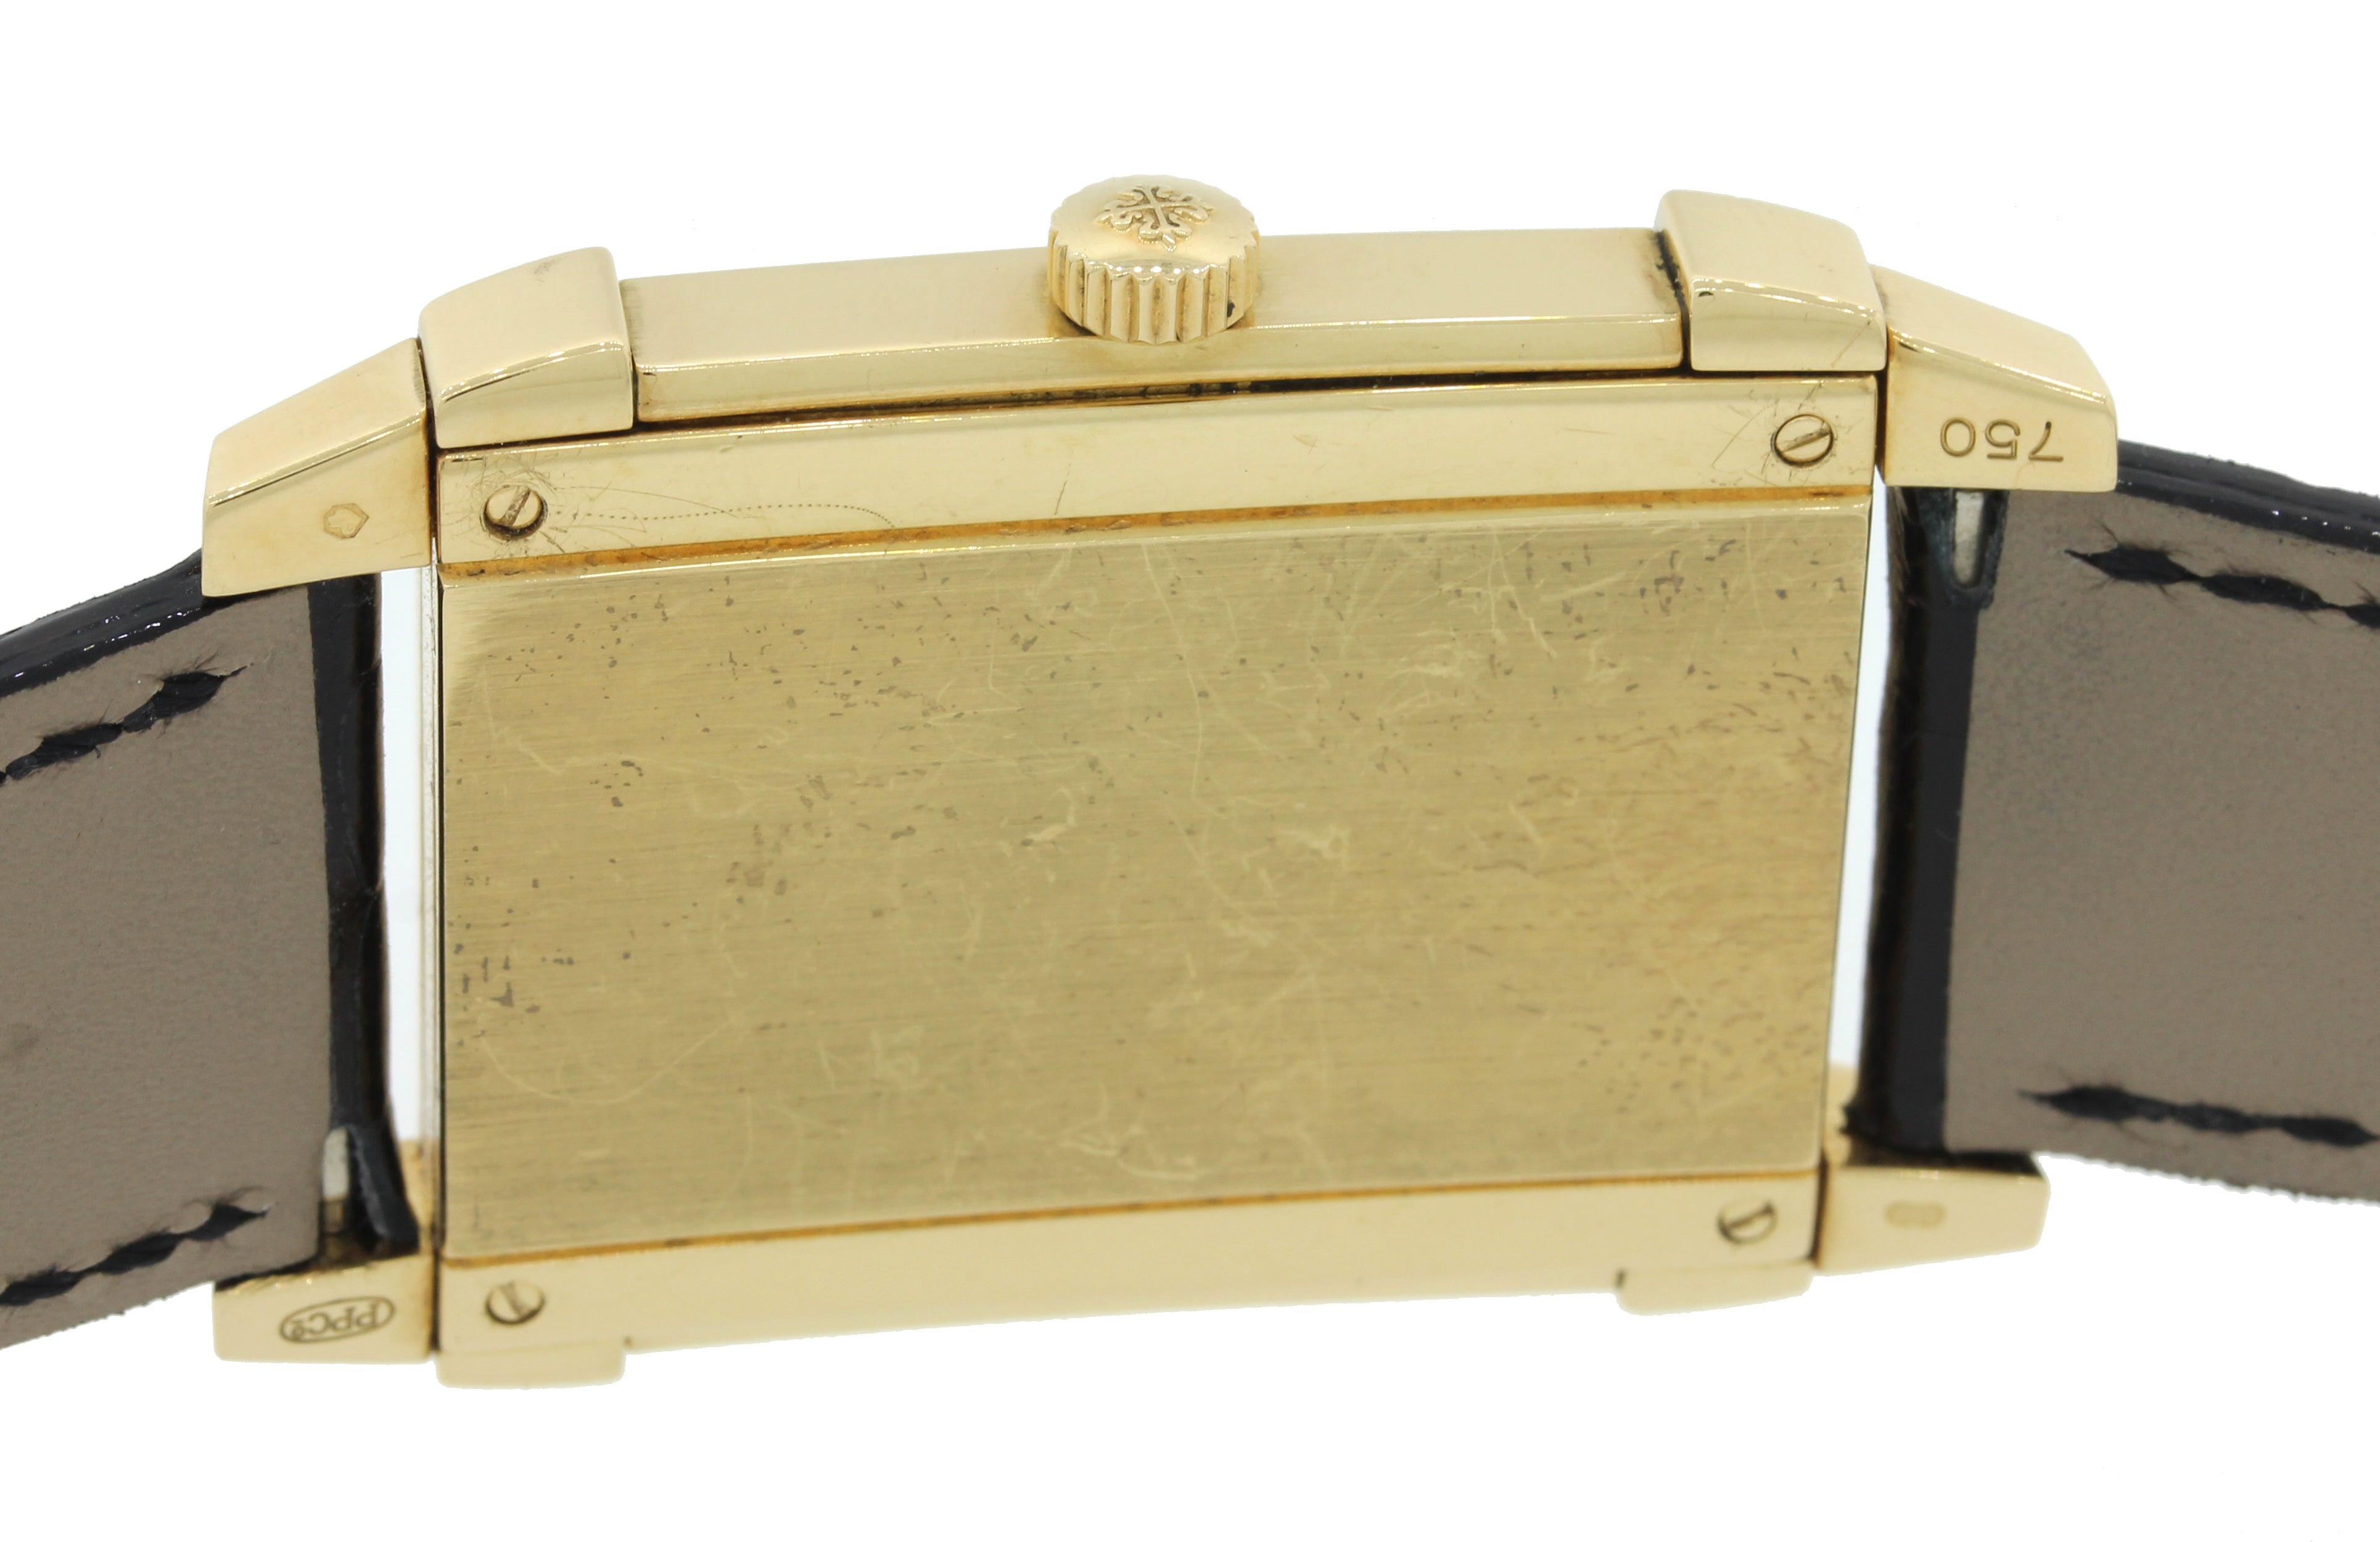 Deco Patek Philippe Gondolo 18k Gold 32mm Silver Dial Manual 5111 J Watch w Box